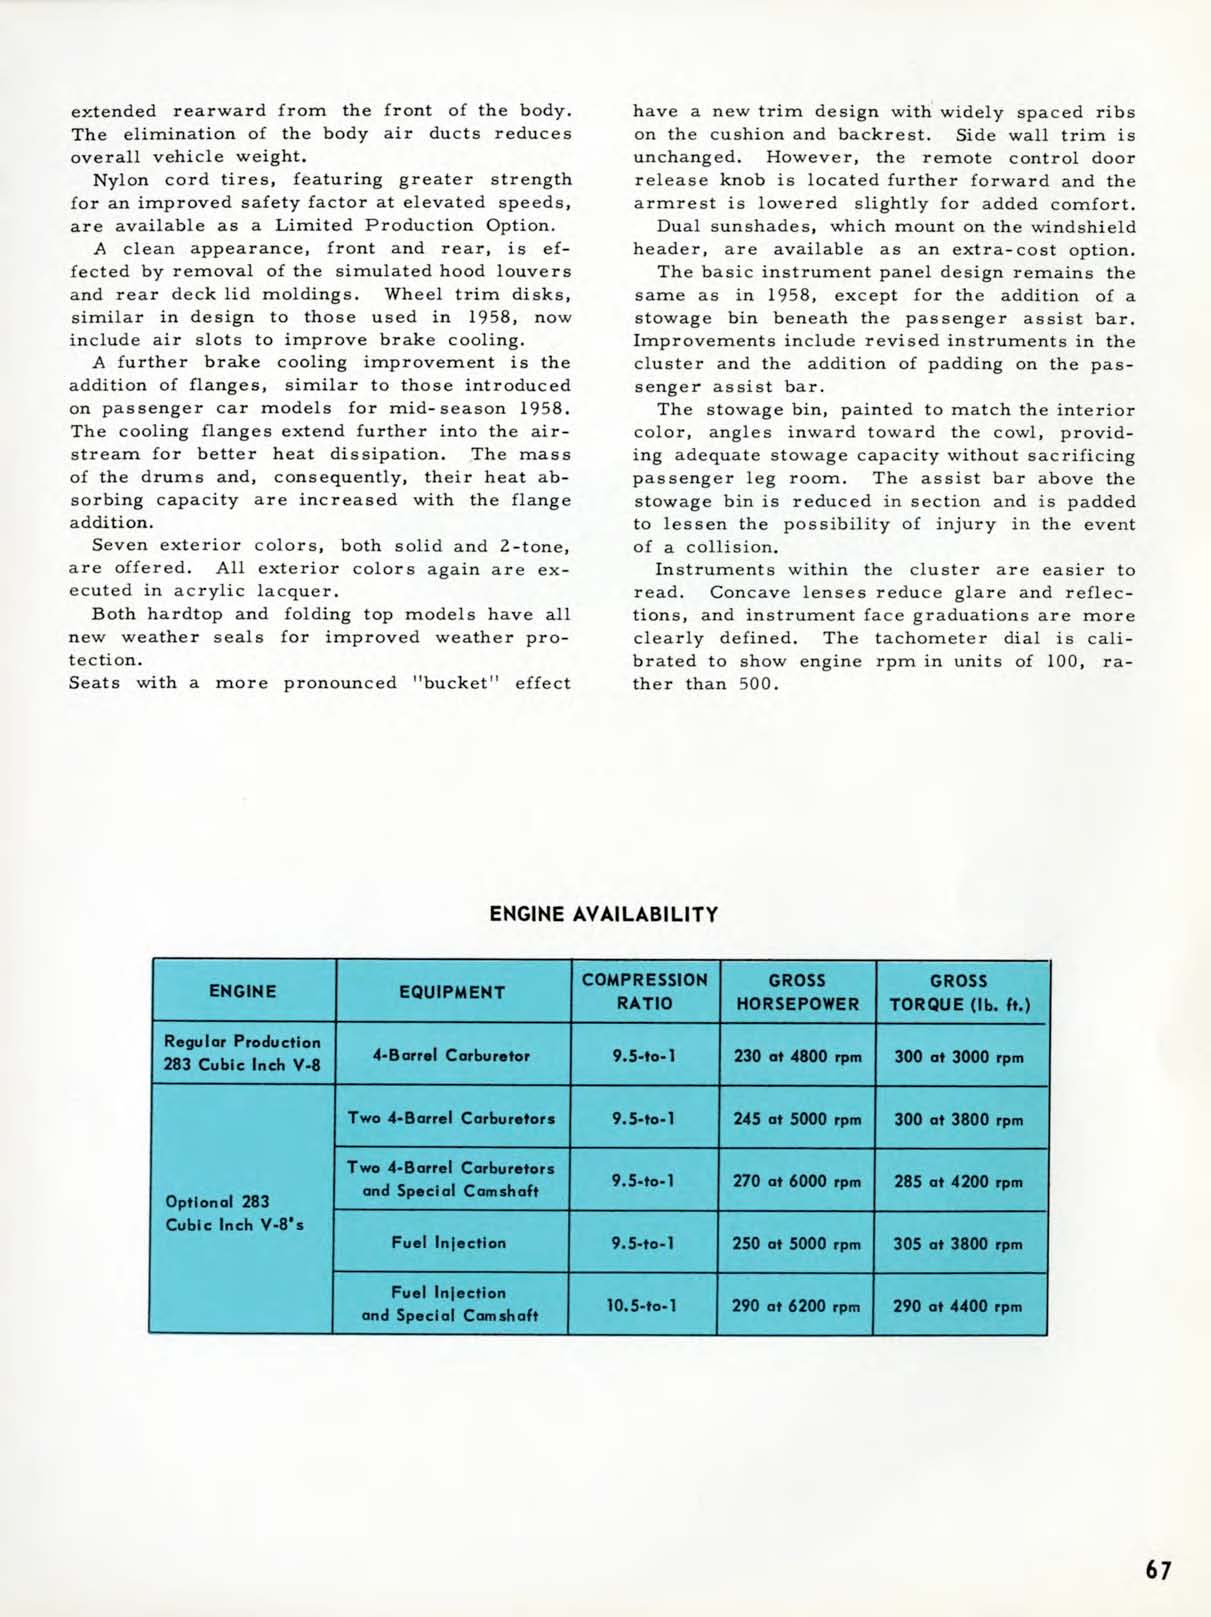 1959_Chevrolet_Engineering_Features-67